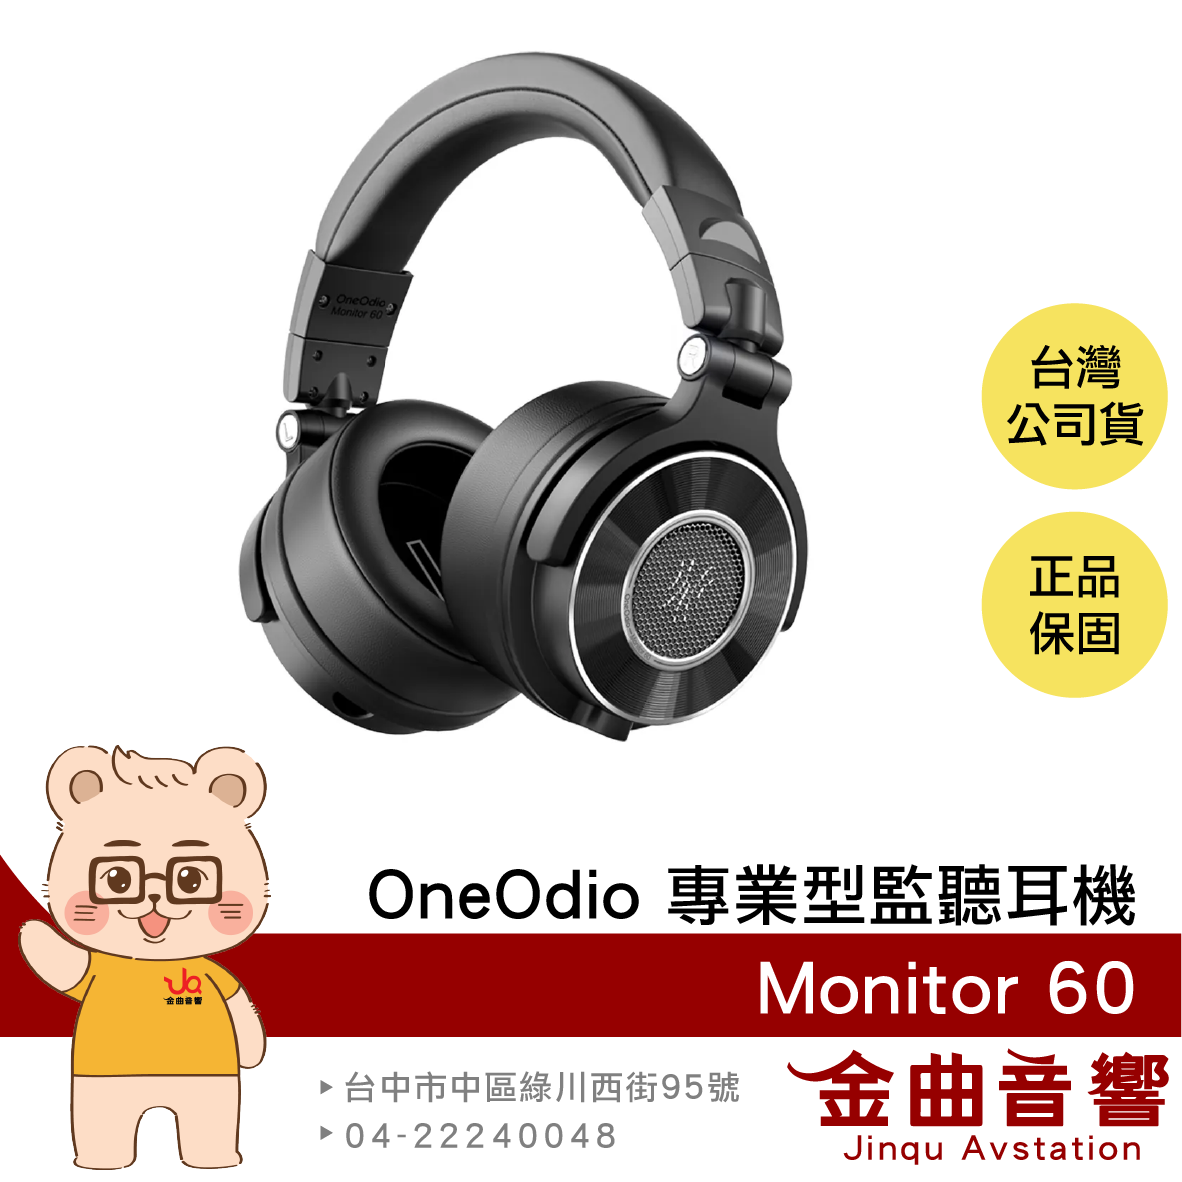 OneOdio Monitor 60 線控麥克風 50mm驅動單體 可摺疊 HI-Res 監聽耳機 | 金曲音響